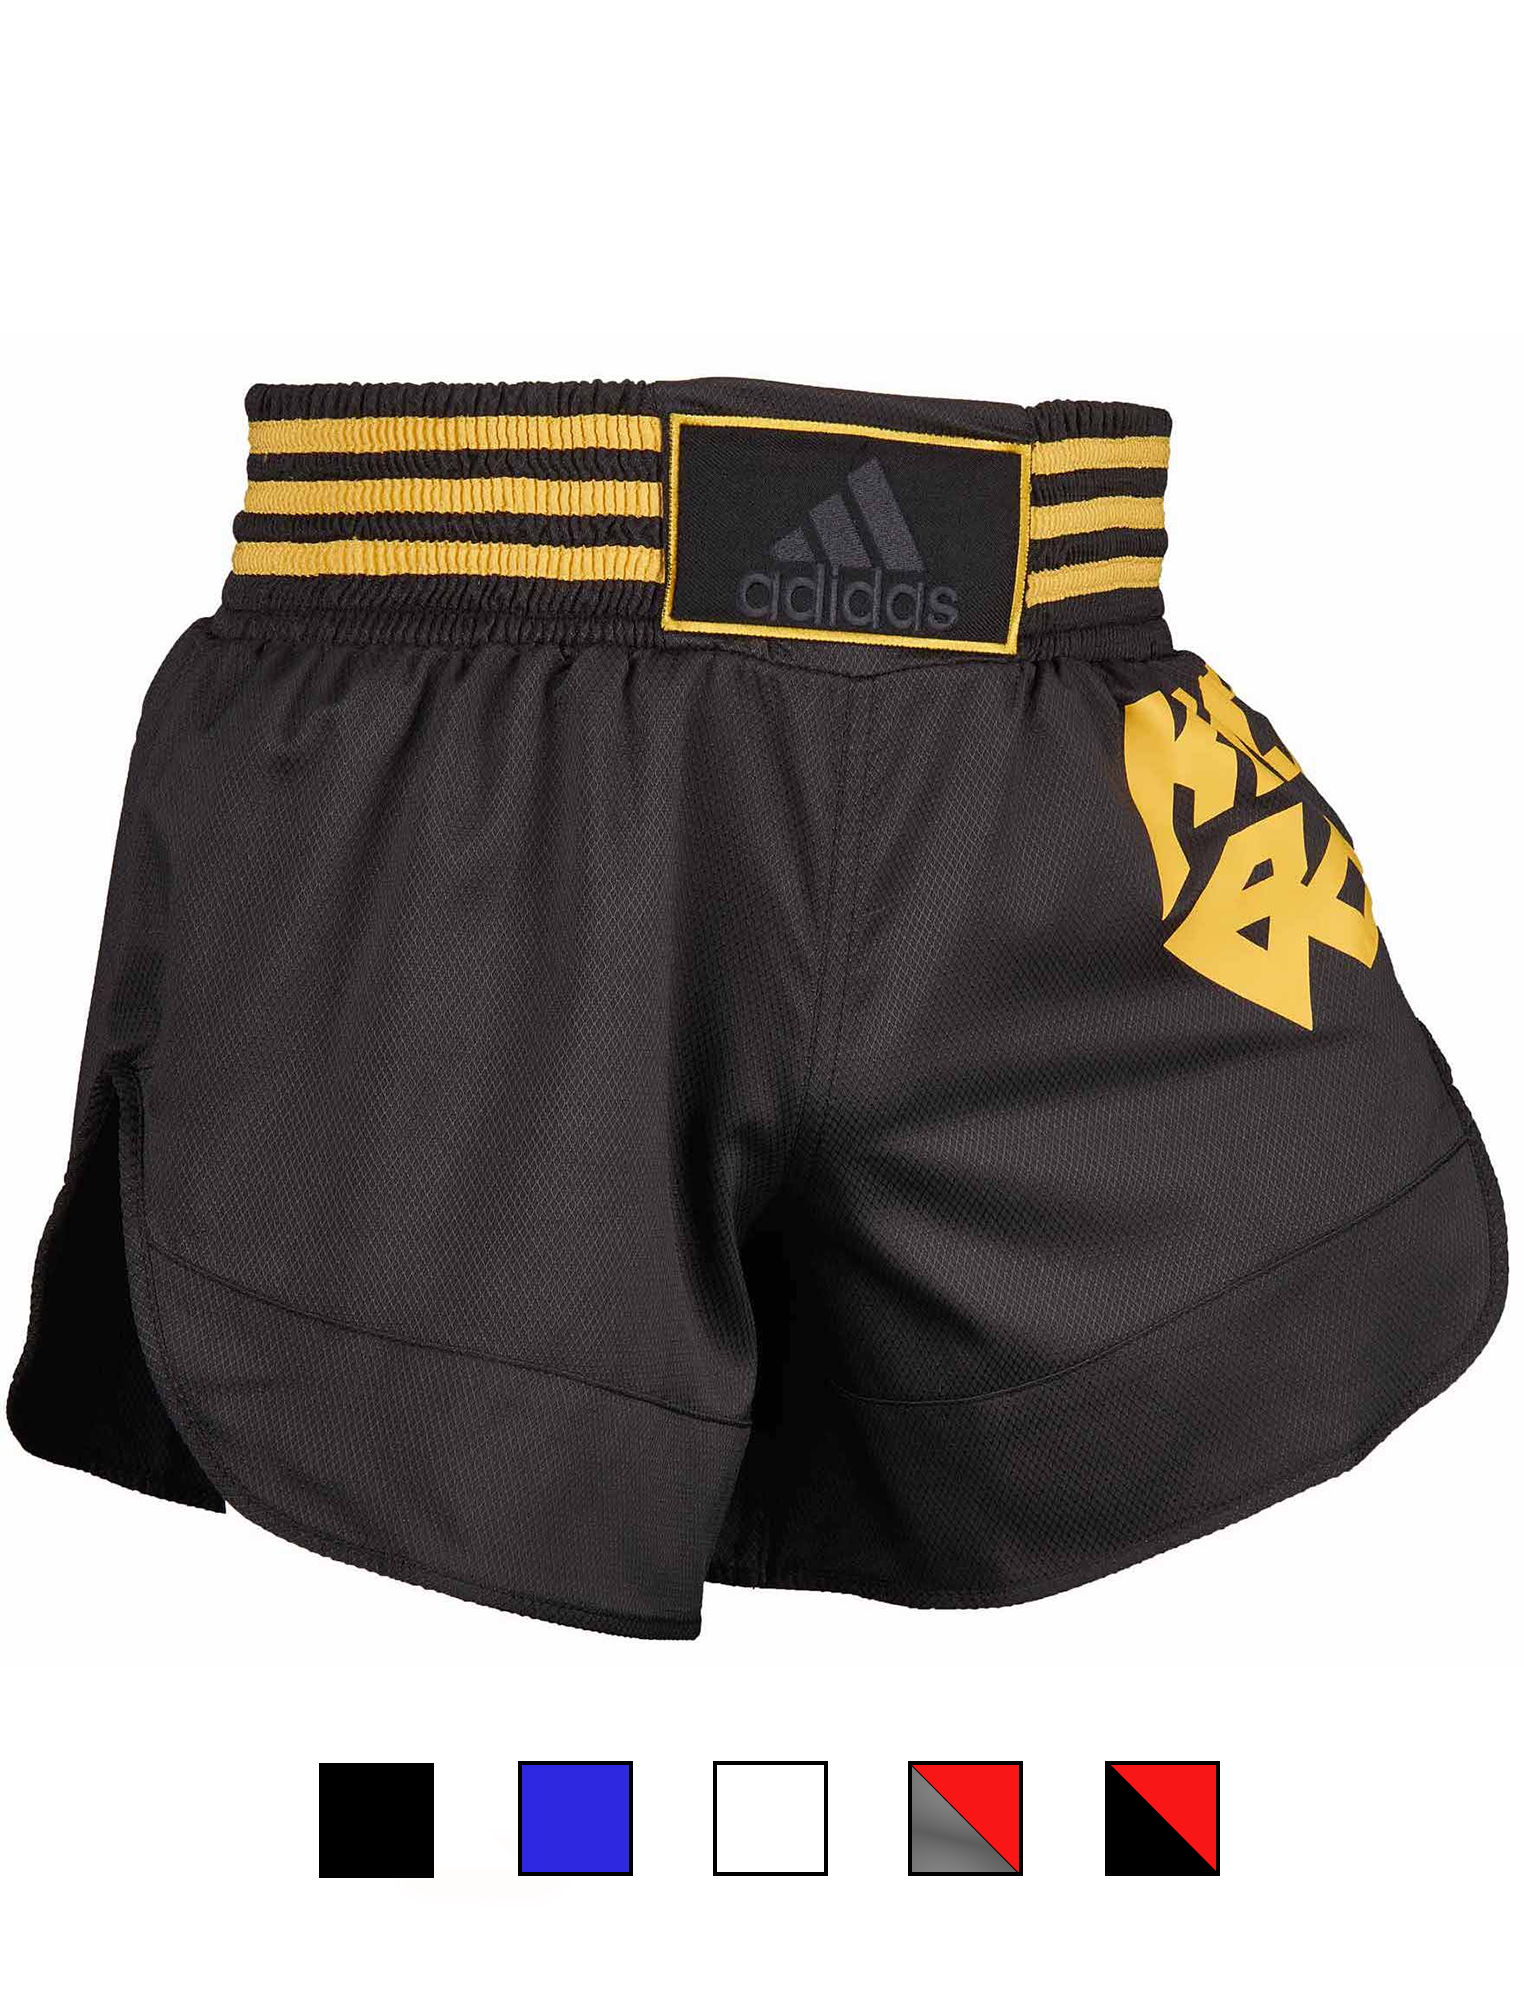 adidas Kick Boxing Shorts ADISKB02 black/gold